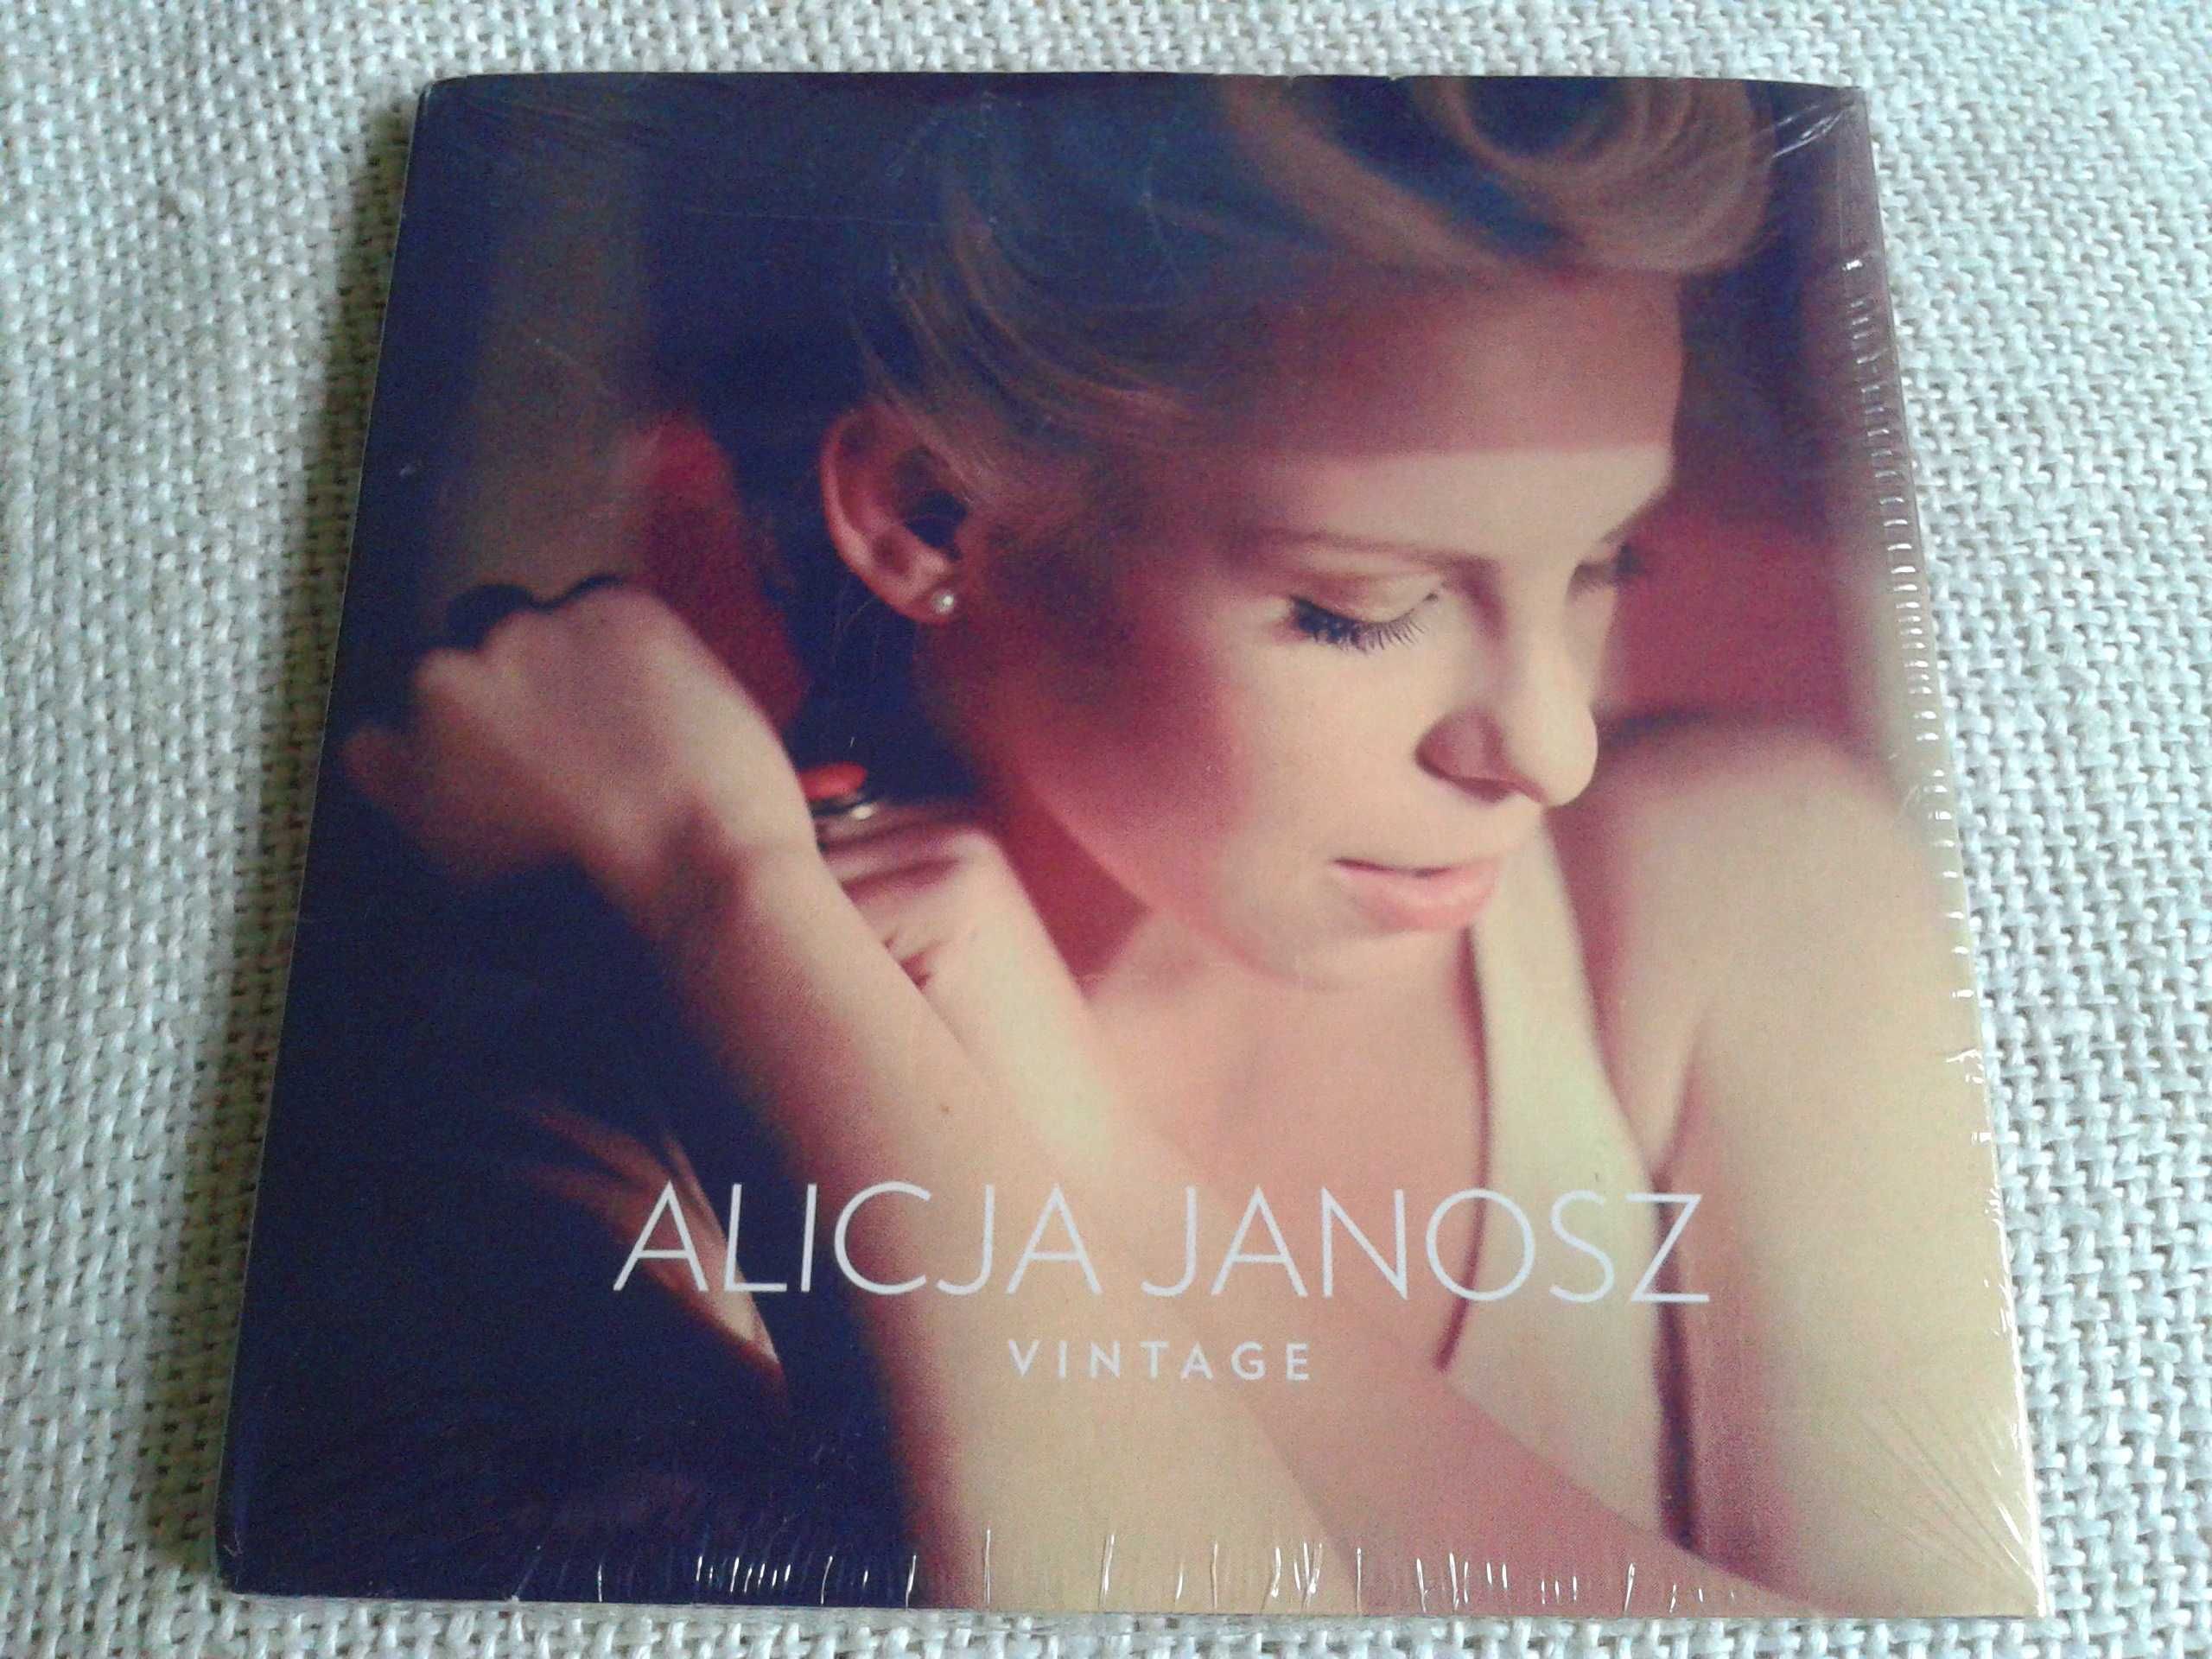 Alicja Janosz - Vintage CD+DVD